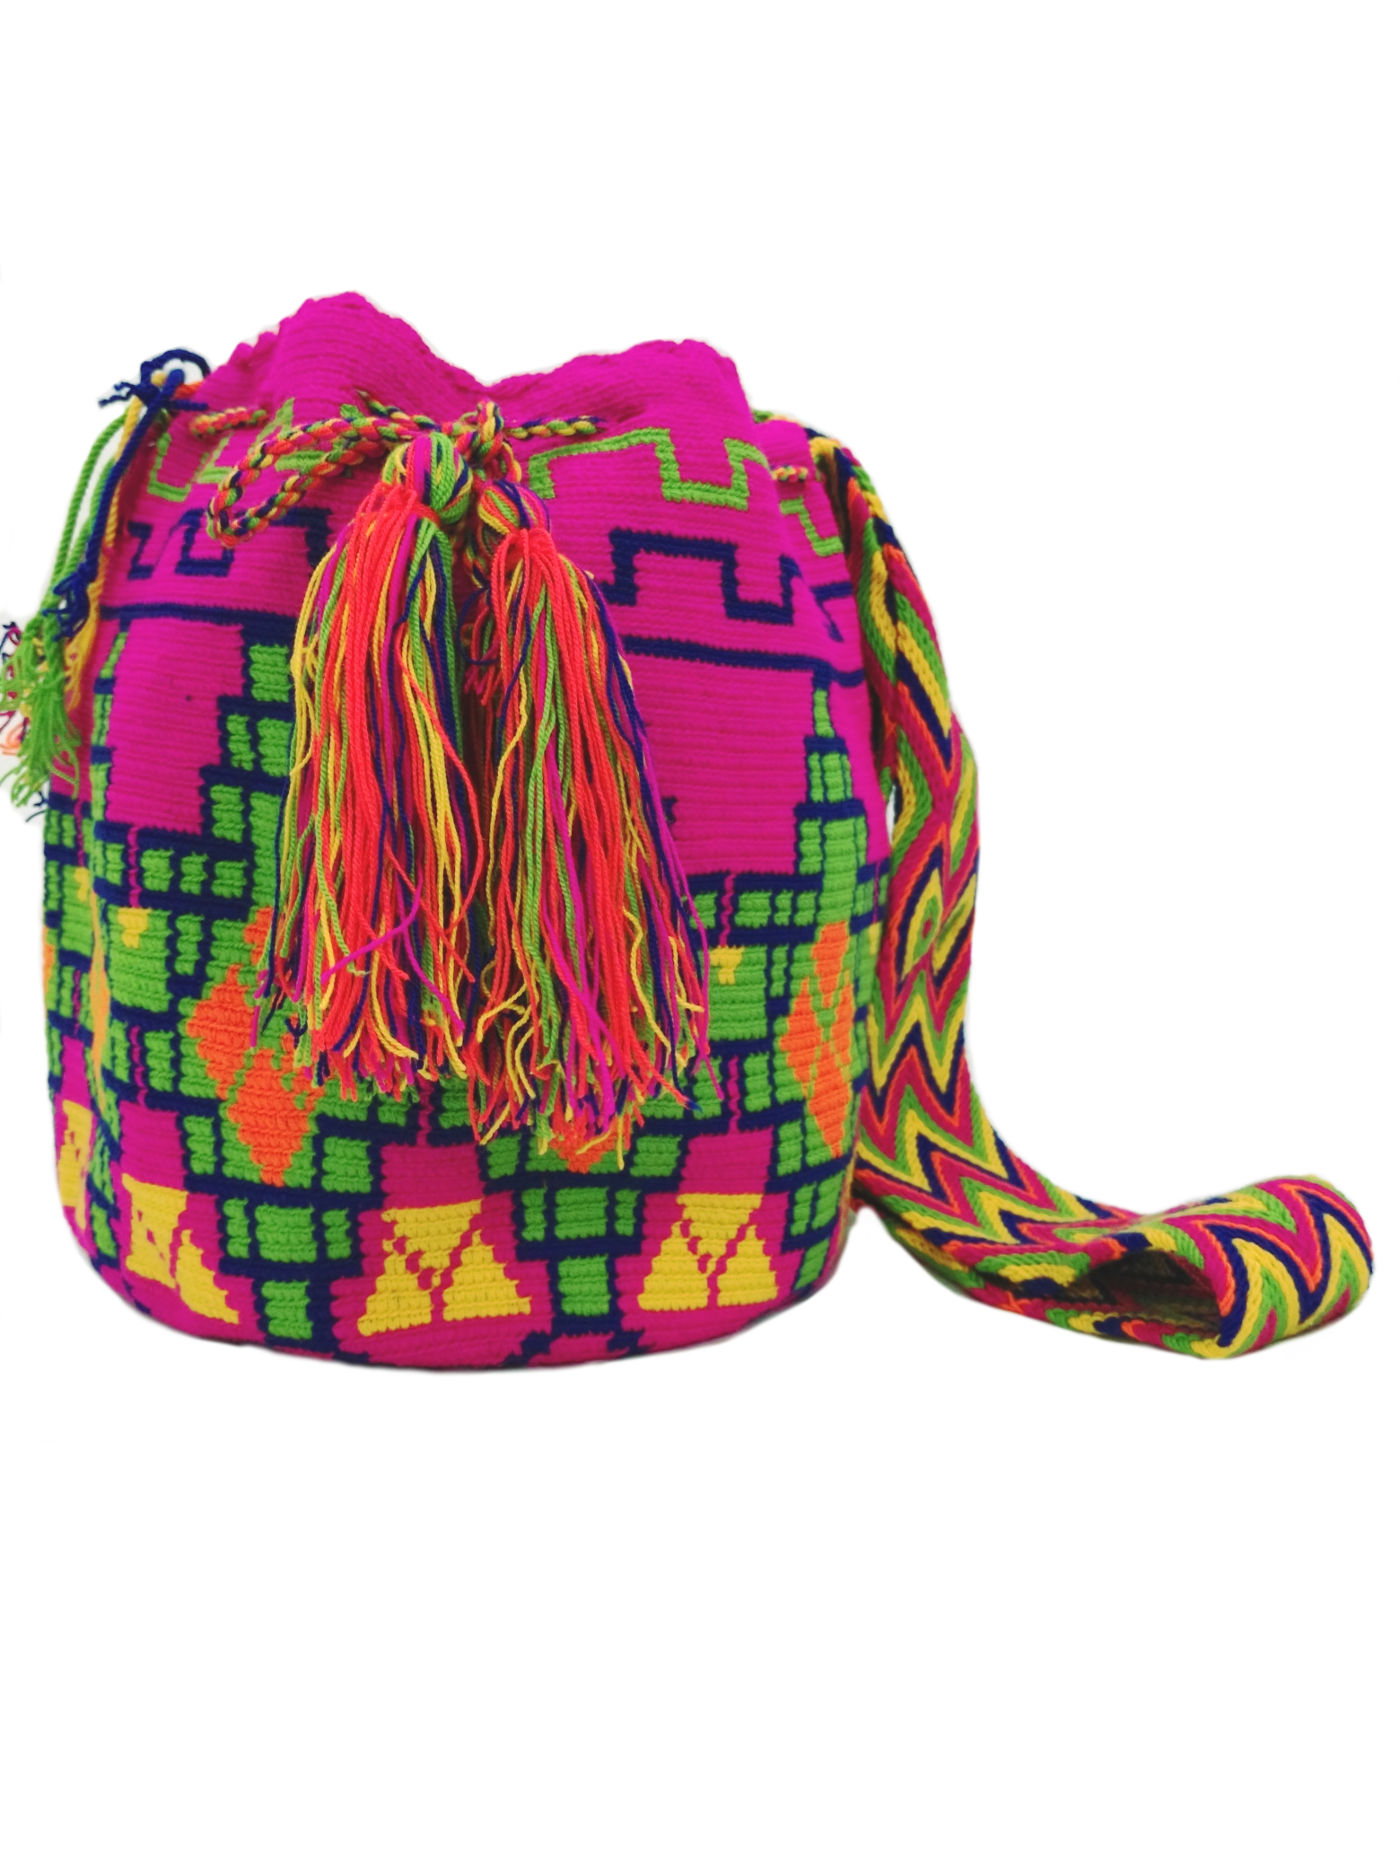 Bolsos wayuu - bolsos artesanalaes - Productos hechos a mano - Moda artesanal - Beachroundtowel